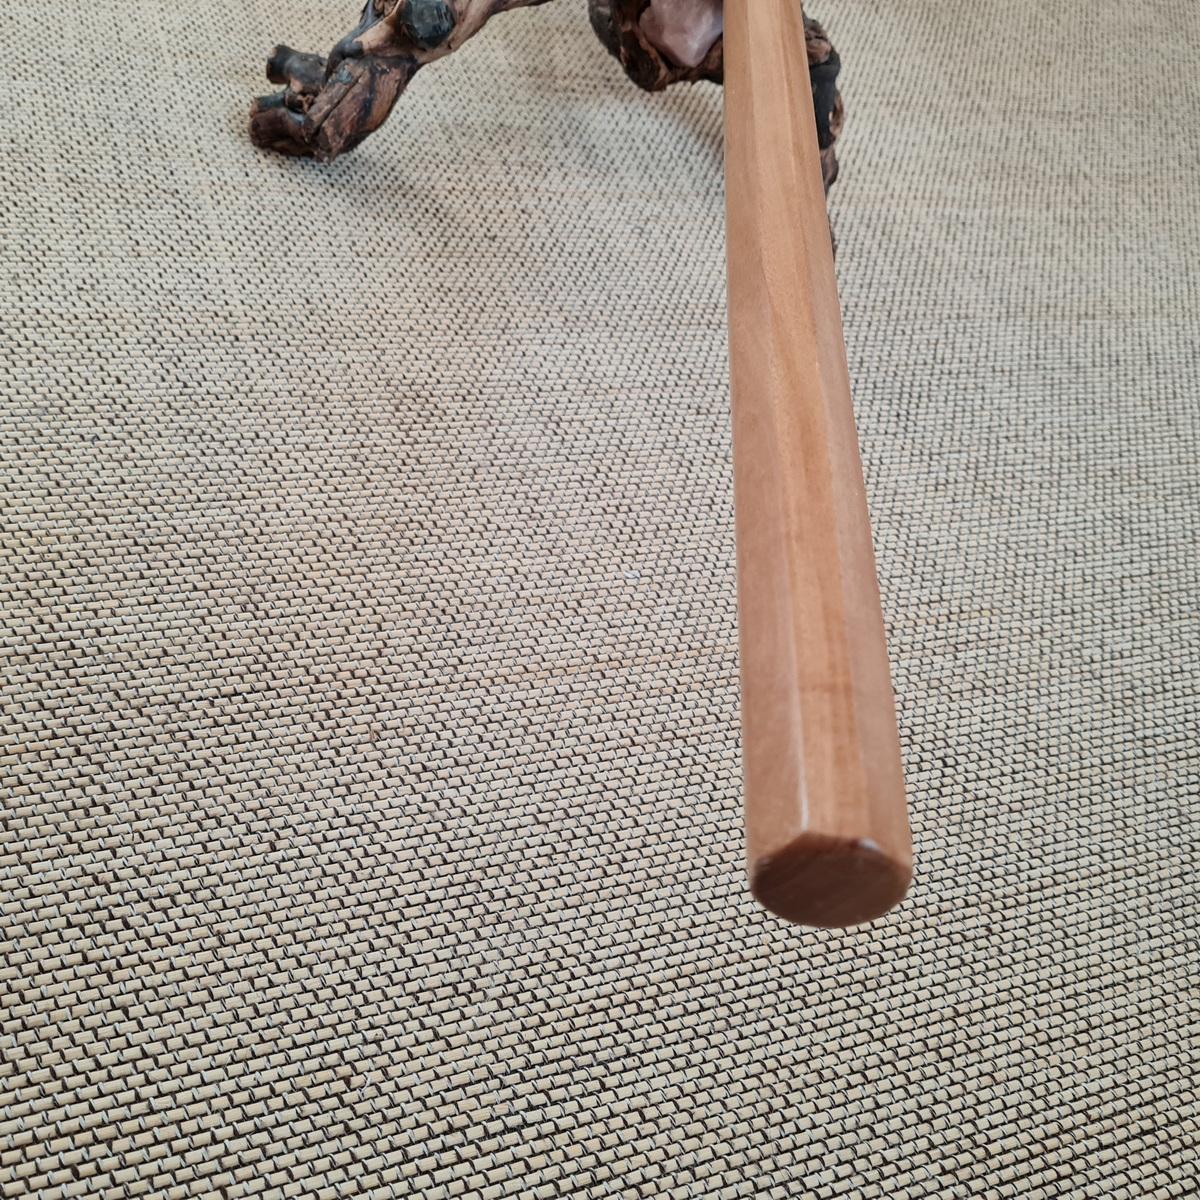 Bo stick made of Ghio wood - octagonal (special sale) »www.bokken-shop.de ✅ Long stick for Aikido, Iaido, Kendo, Koryu, Jodo, your Budo specialist dealer!